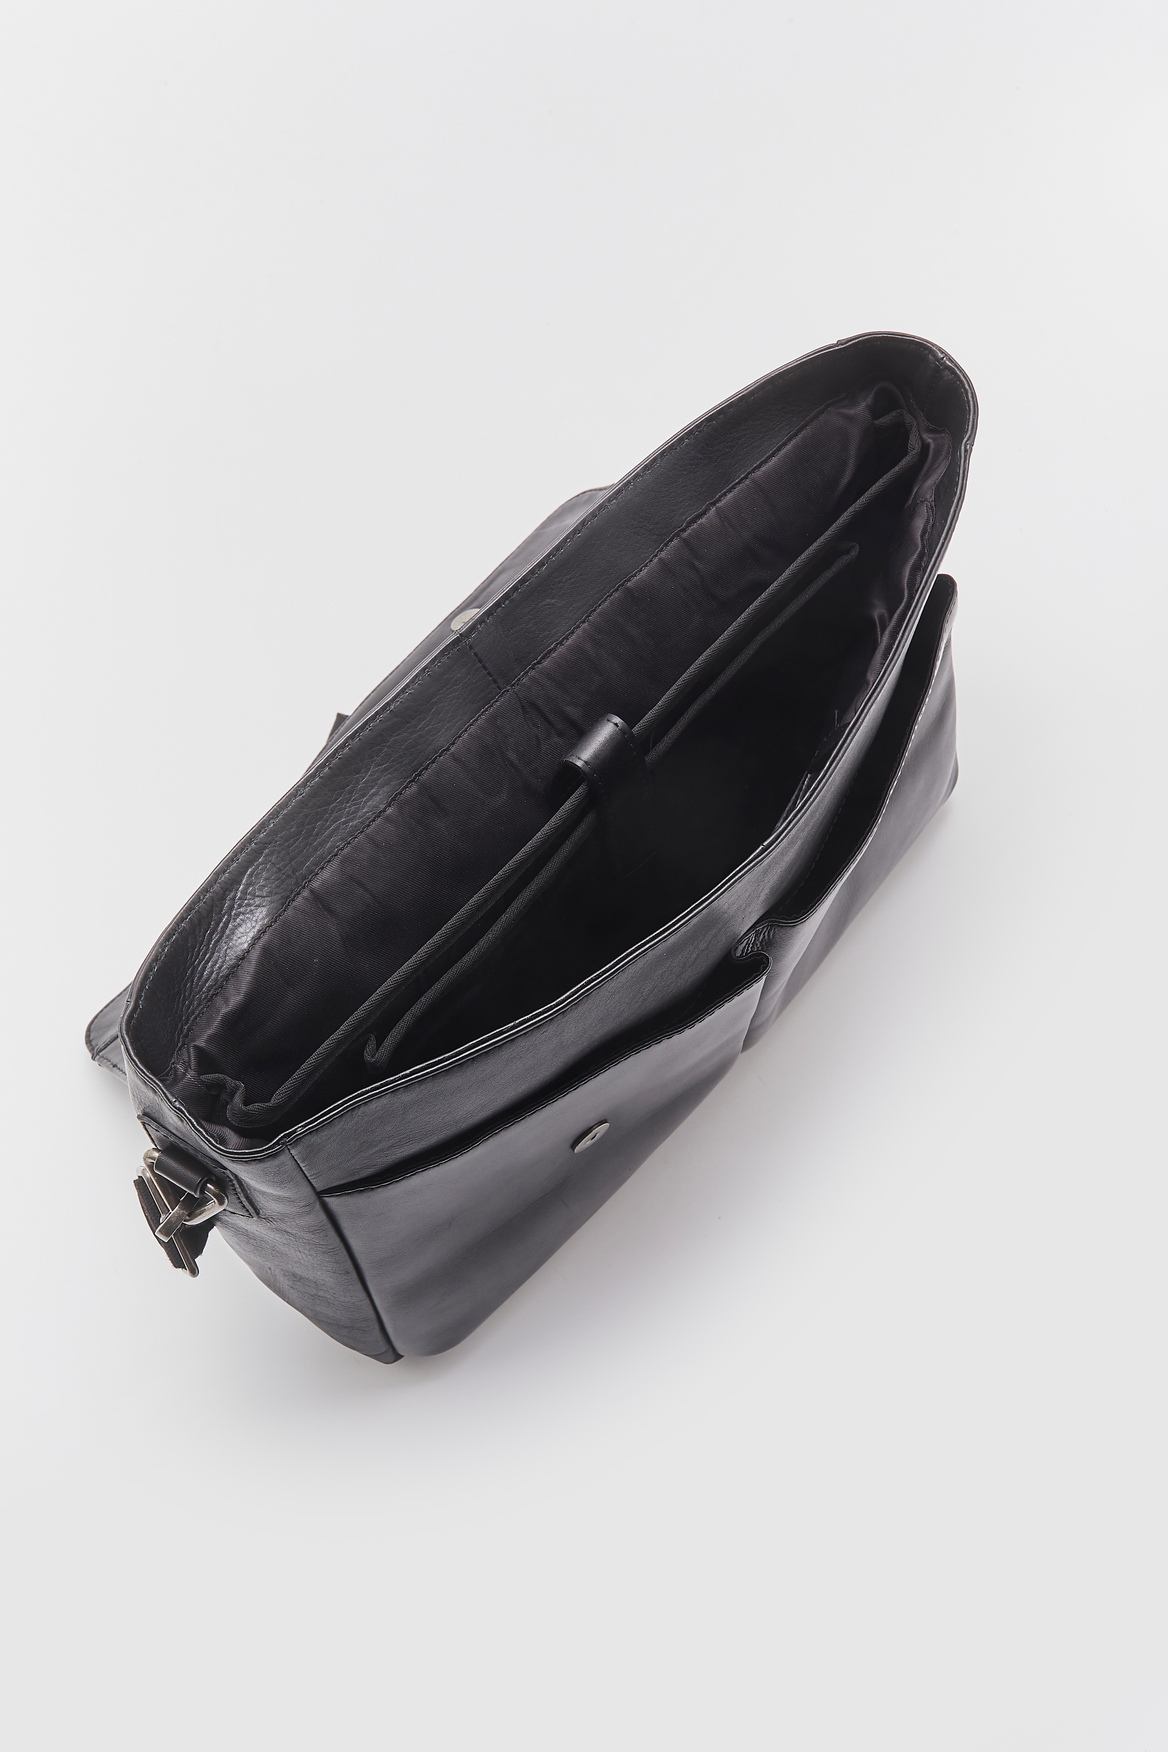 Colorado Tobias Leather Briefcase – Strandbags Australia